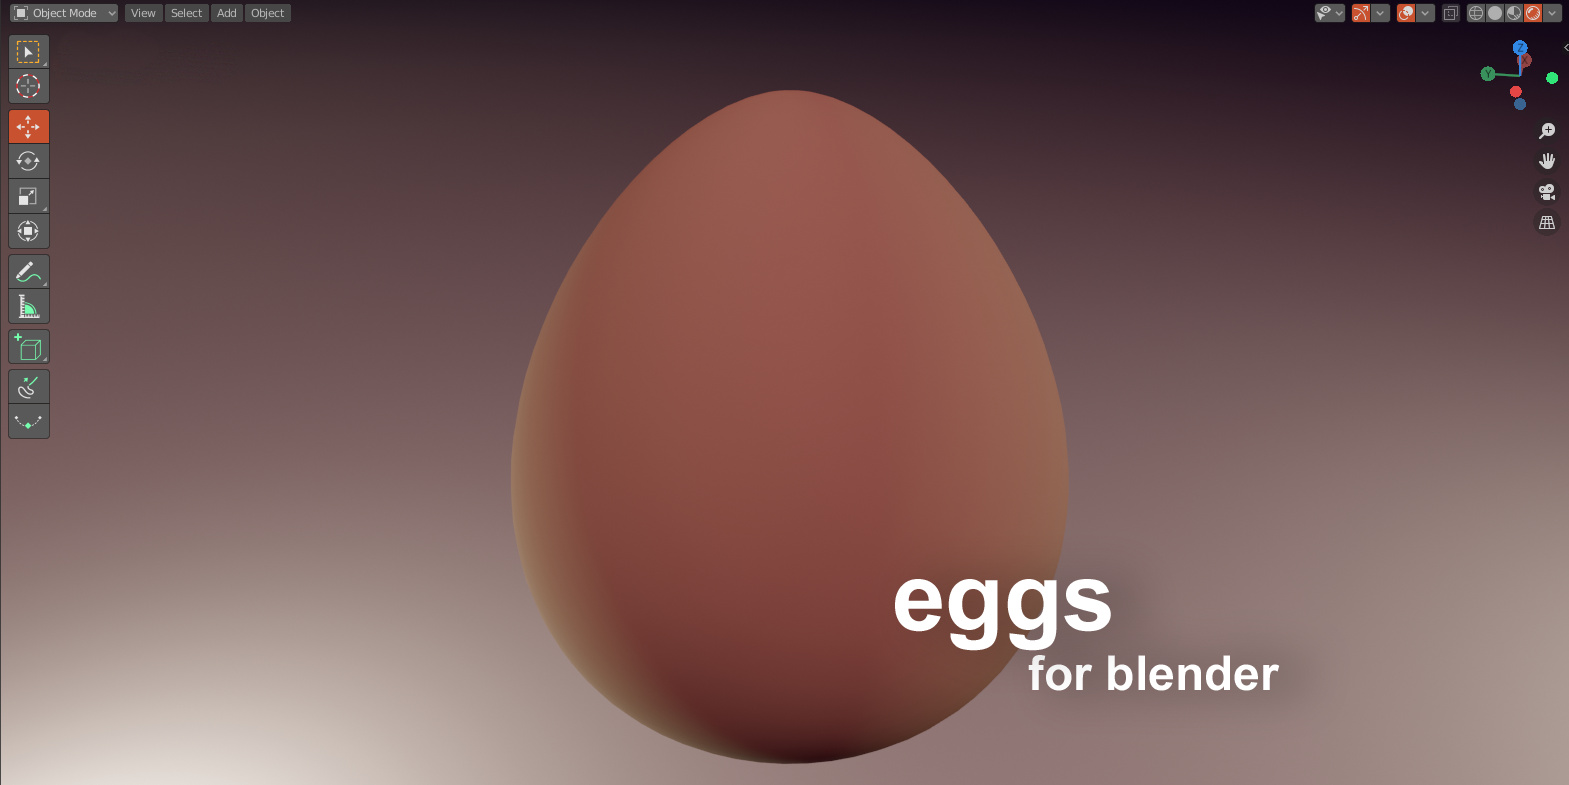 Egg Object for Blender - Released Scripts and Themes - Blender